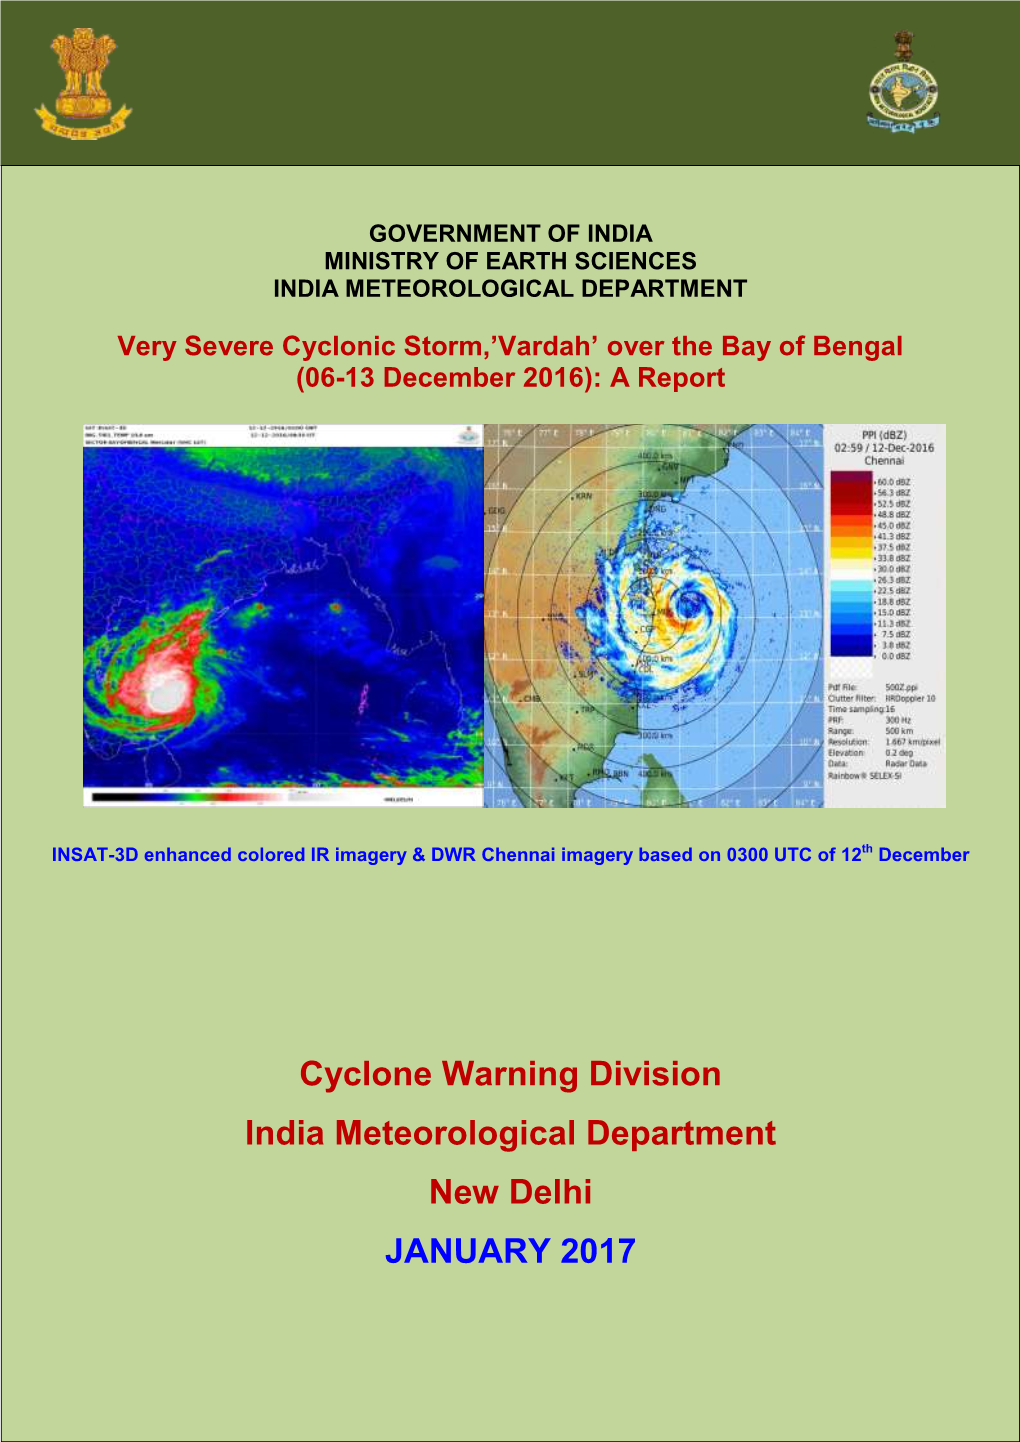 Cyclone Warning Division India Meteorological Department New Delhi JANUARY 2017